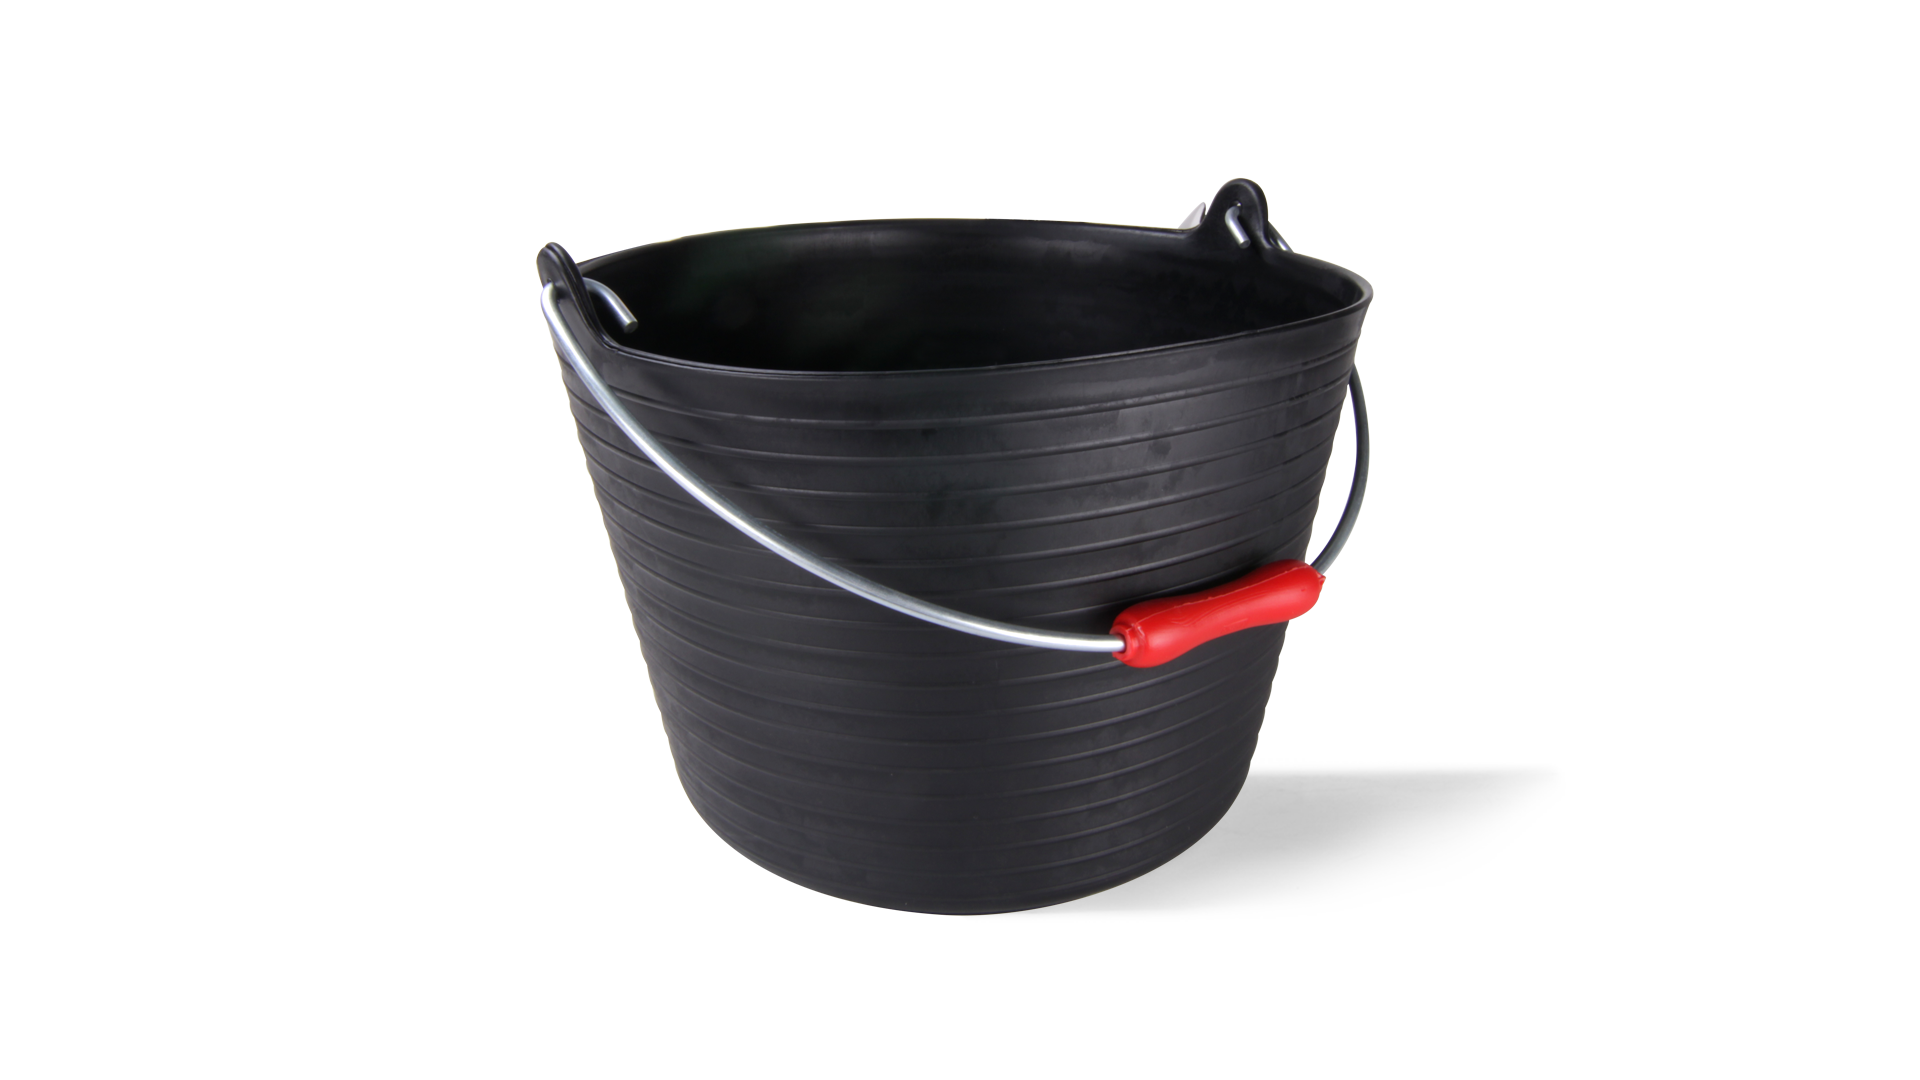 BucketGrips 2-Pack And 5-Gallon Black Plastic Bucket Handle, 59% OFF